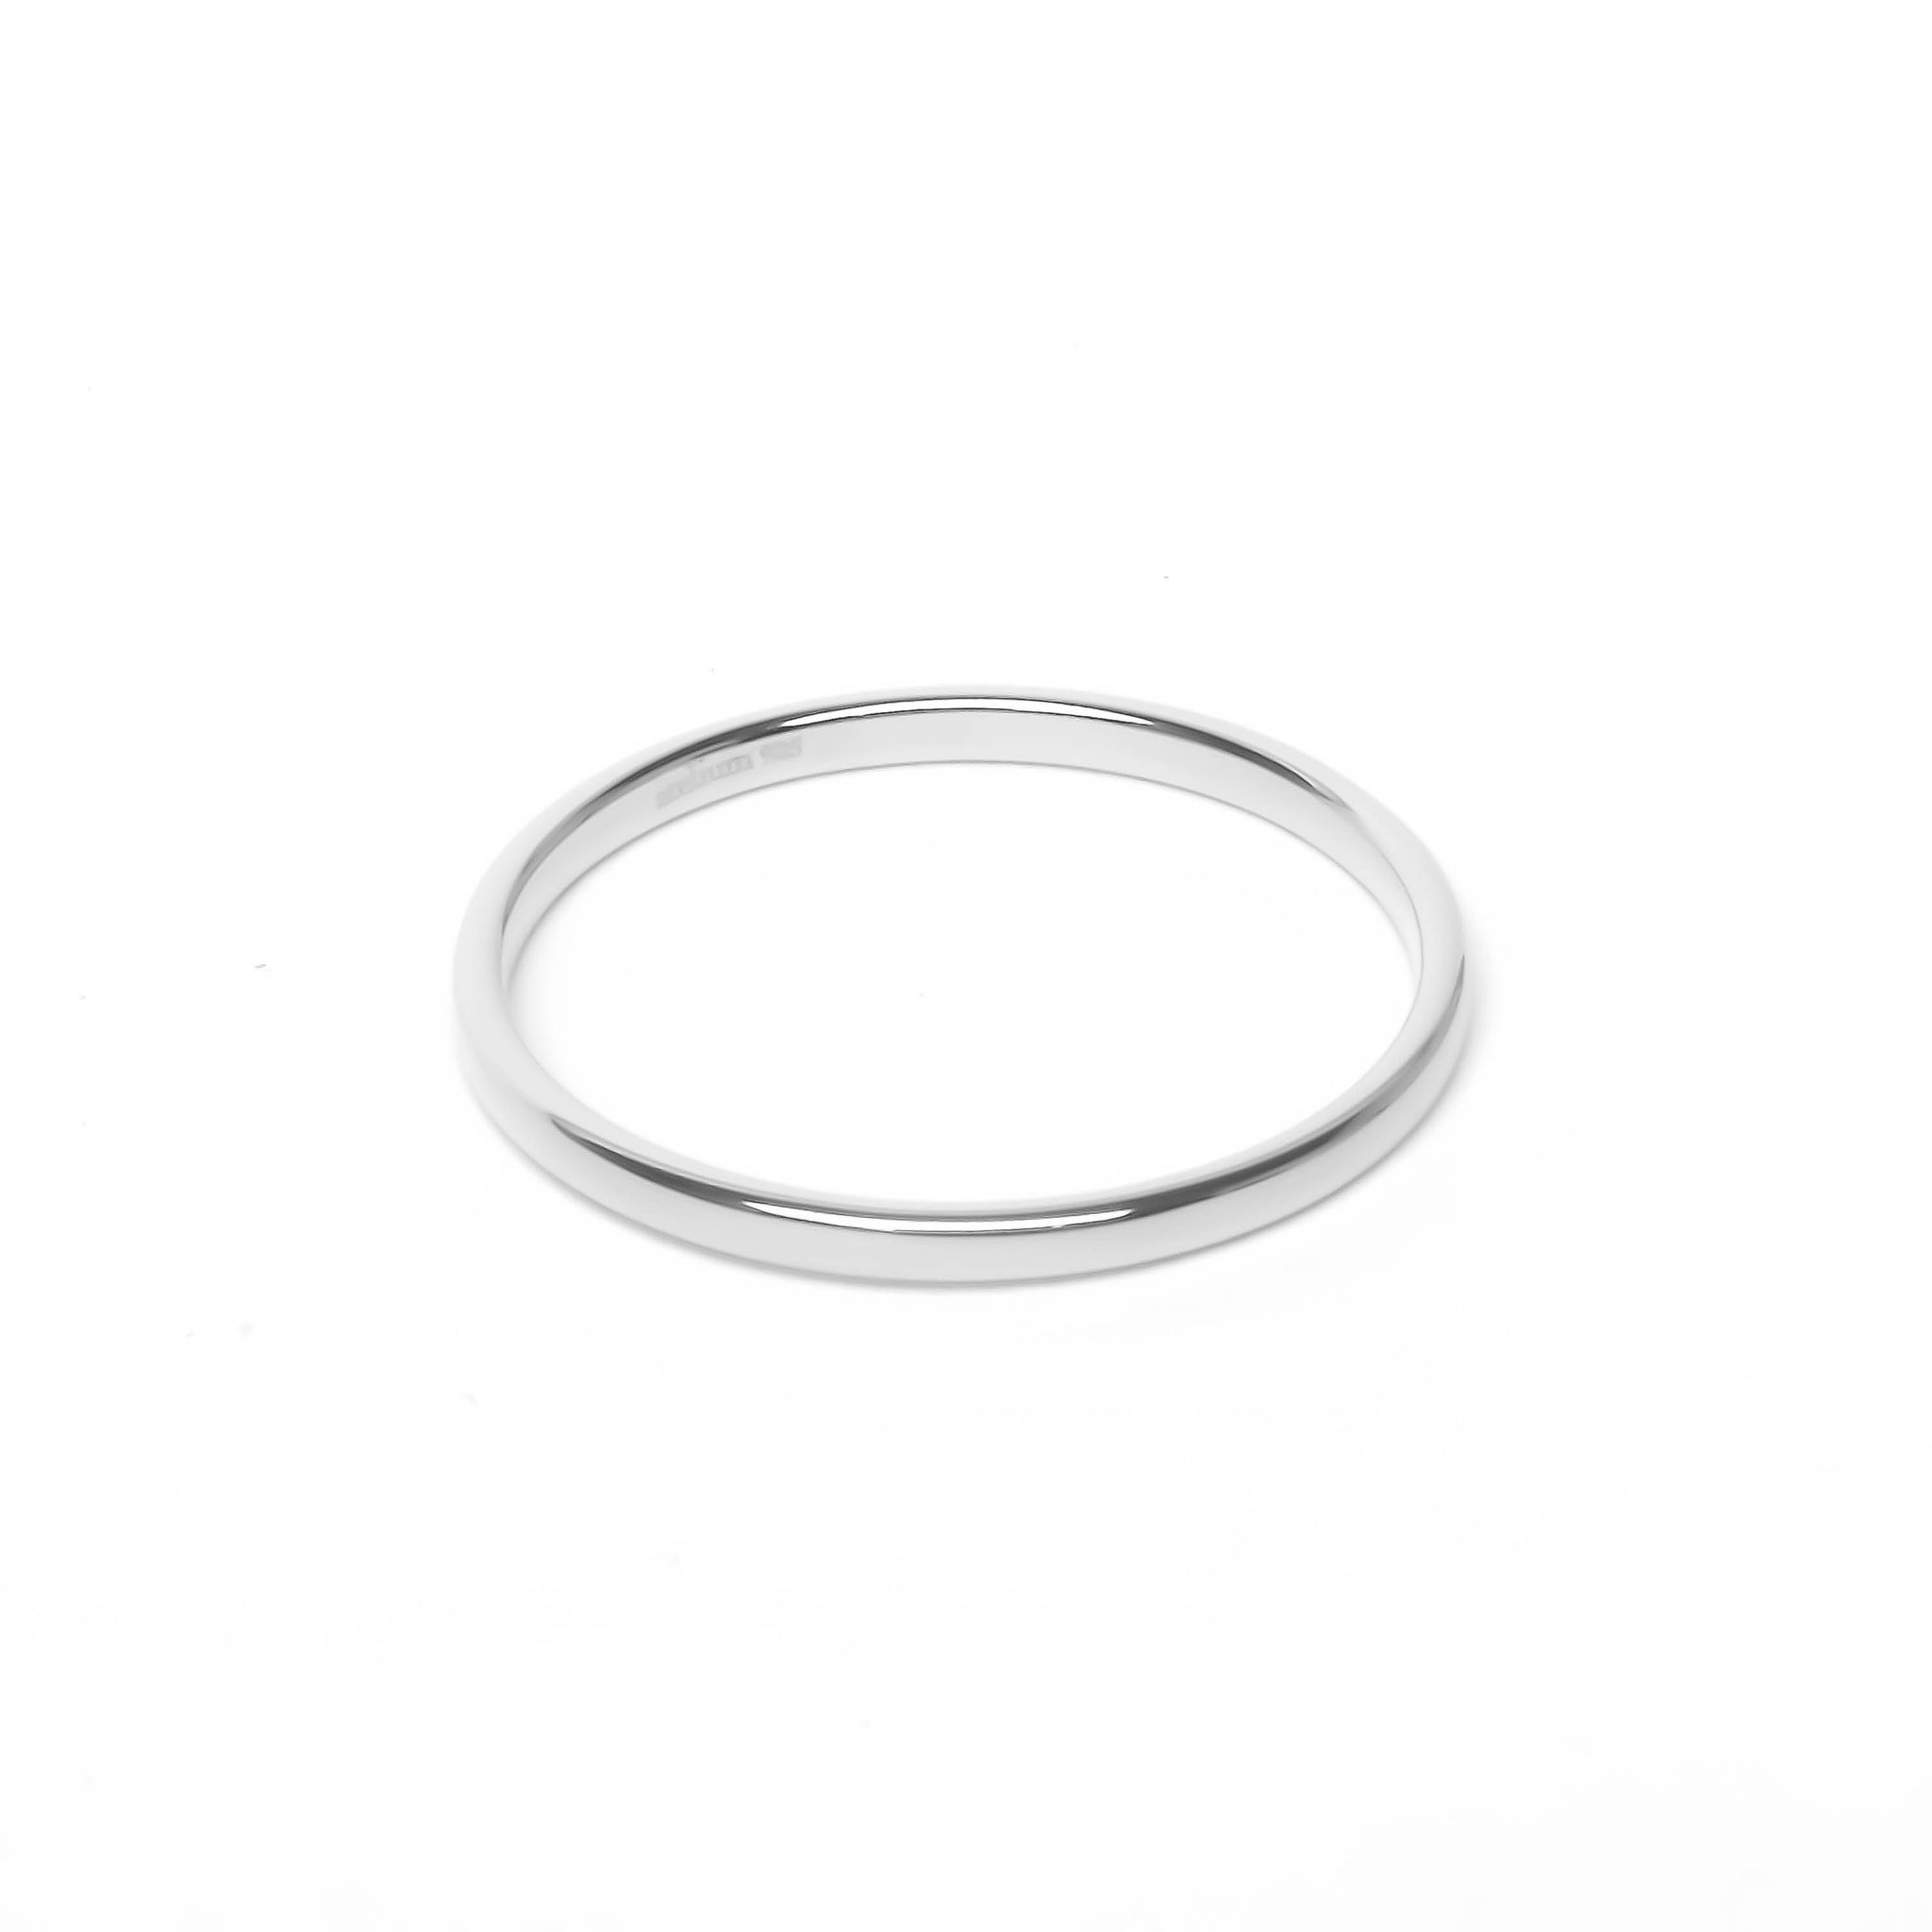 Thin silver ring 